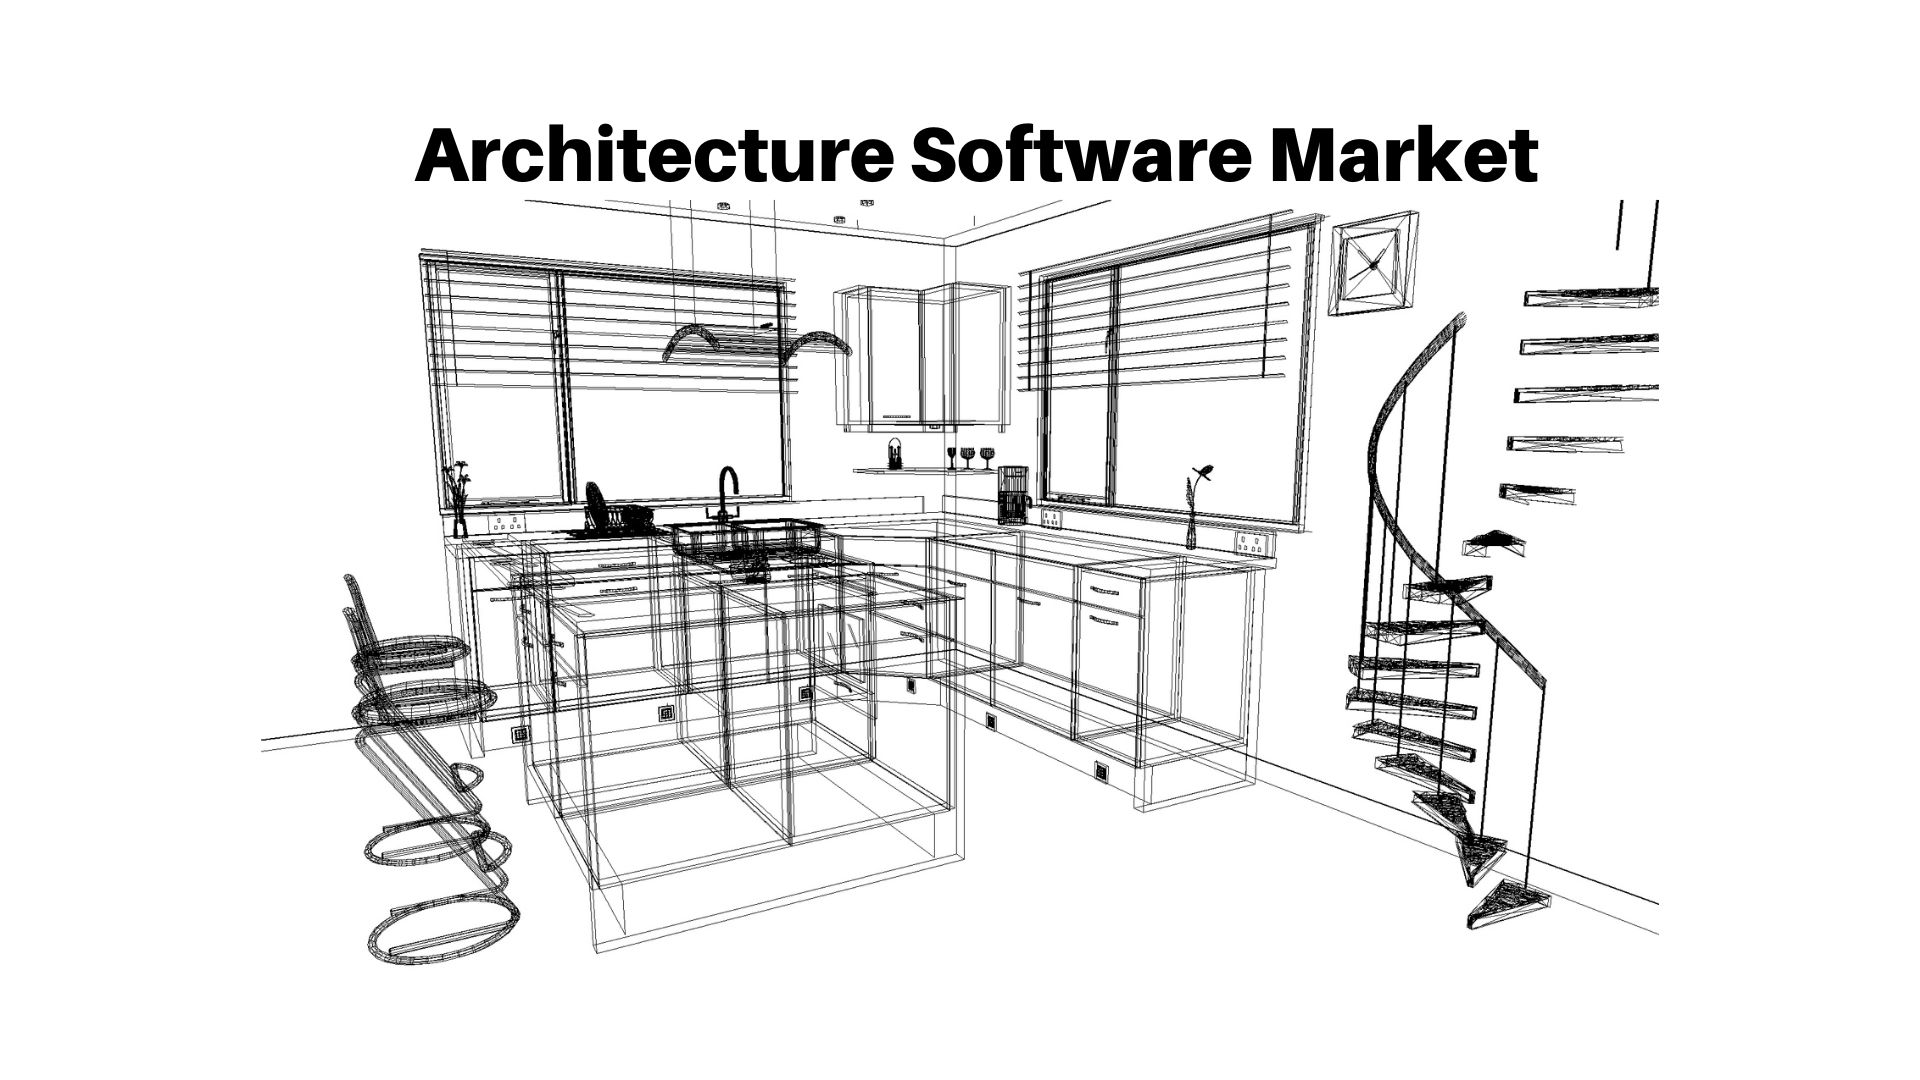 3D Architecture Software Market Size Will Reach USD 9.19 Billion by 2032